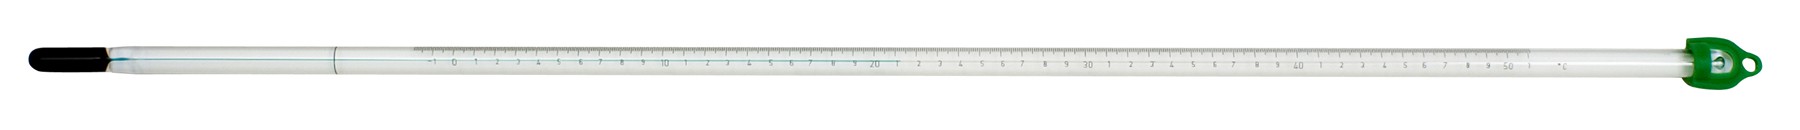 H-B DURAC Plus Precision Liquid-In-Glass Thermometer; -1 to 201C, Total Immersion, Organic Liquid Fill